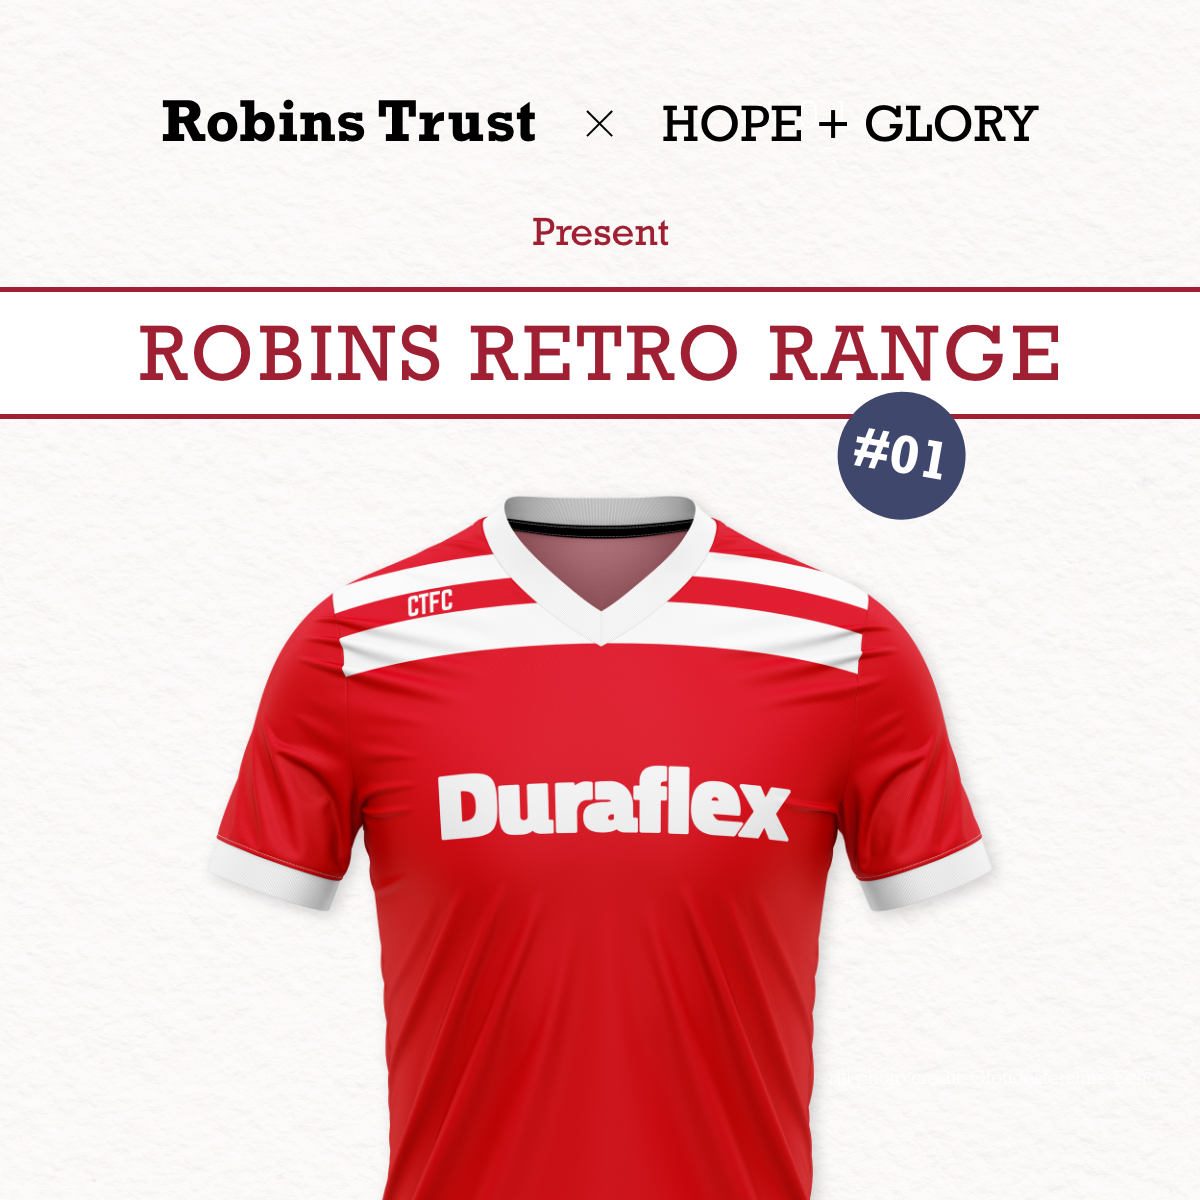 Robins Trust x Hope and Glory Present Robins Retro range #01